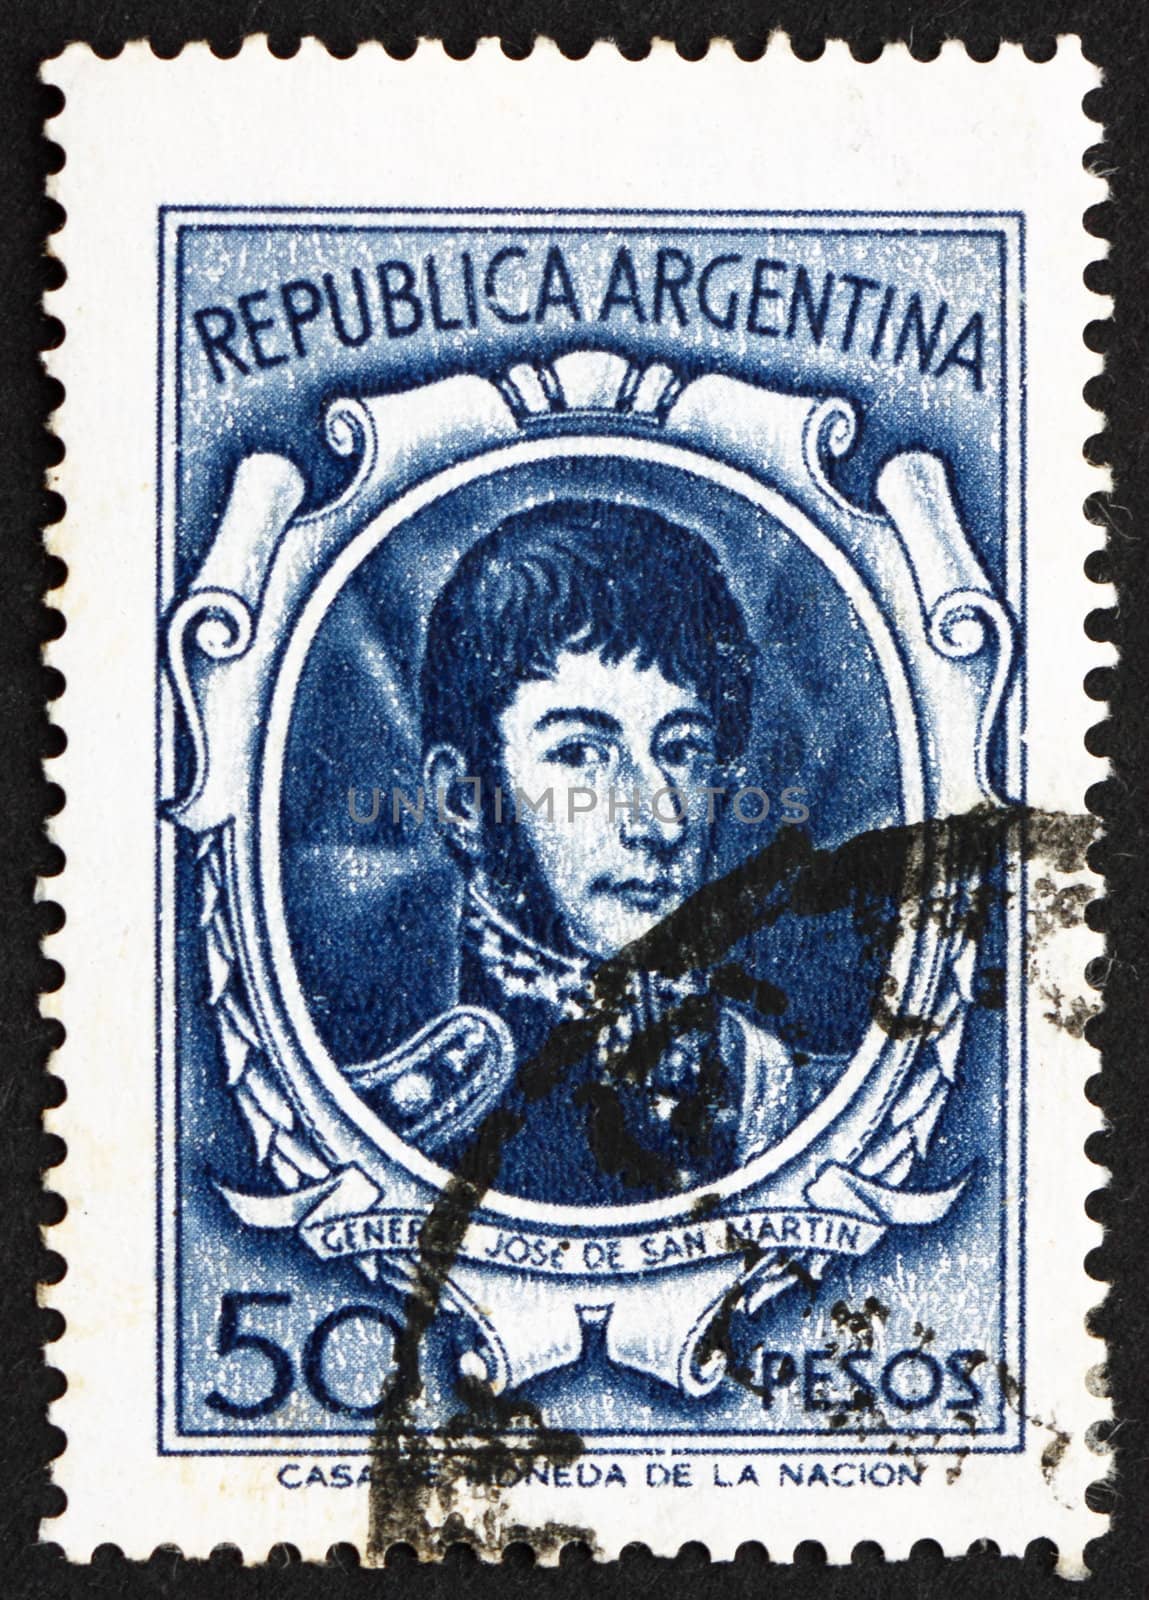 ARGENTINA - CIRCA 1955: a stamp printed in the Argentina shows Jose de San Martin, General, circa 1955